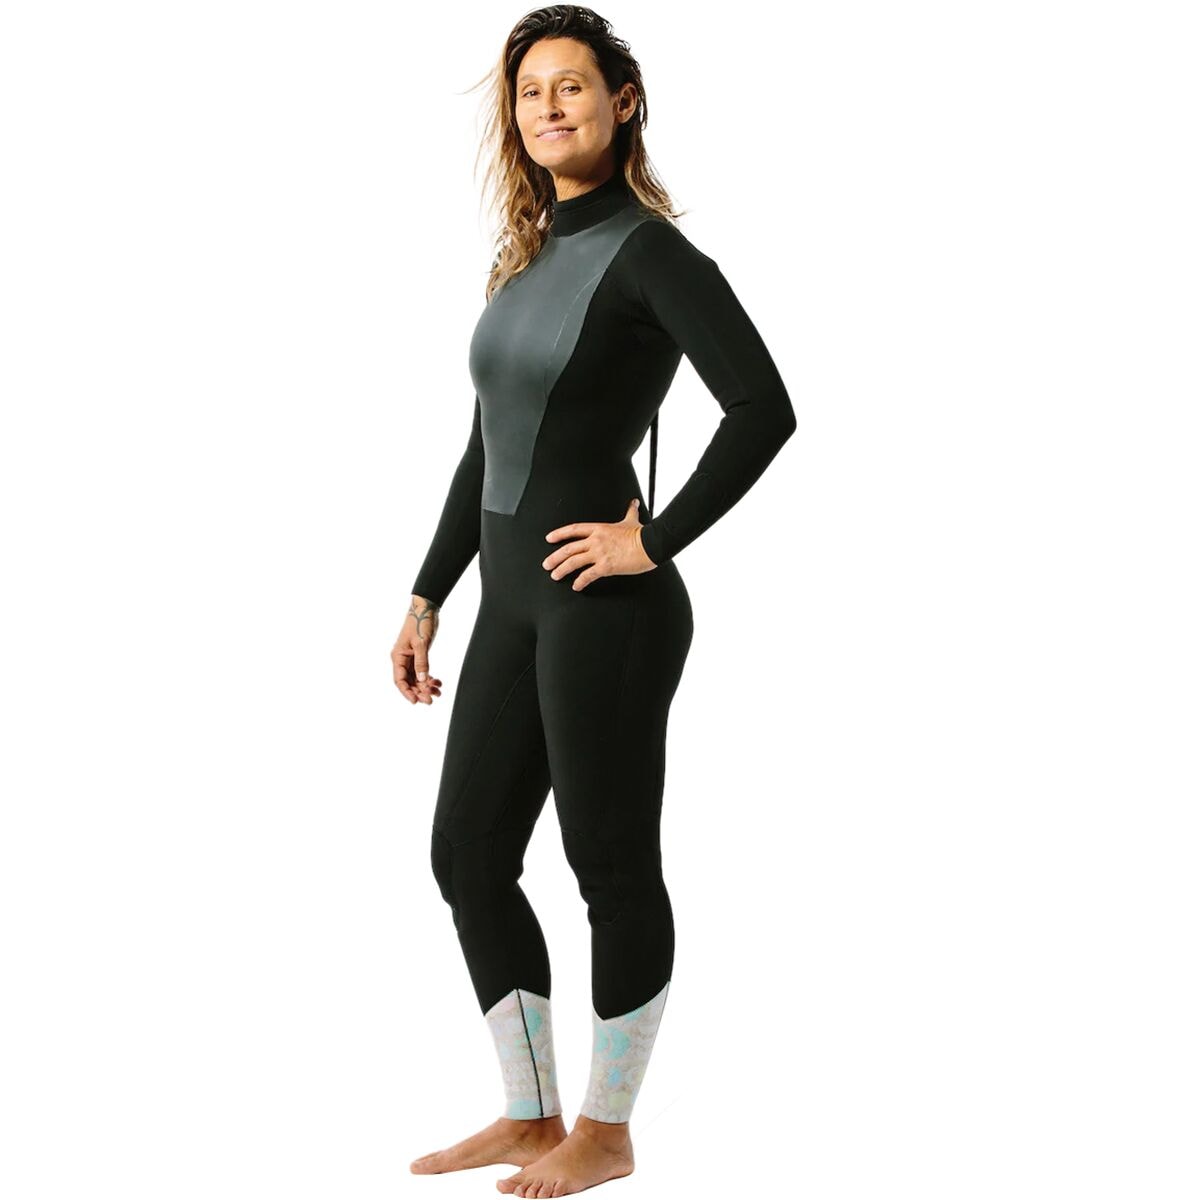 Kassia Surf 3/2 La Luna Back-Zip Fullsuit Wetsuit - Women's